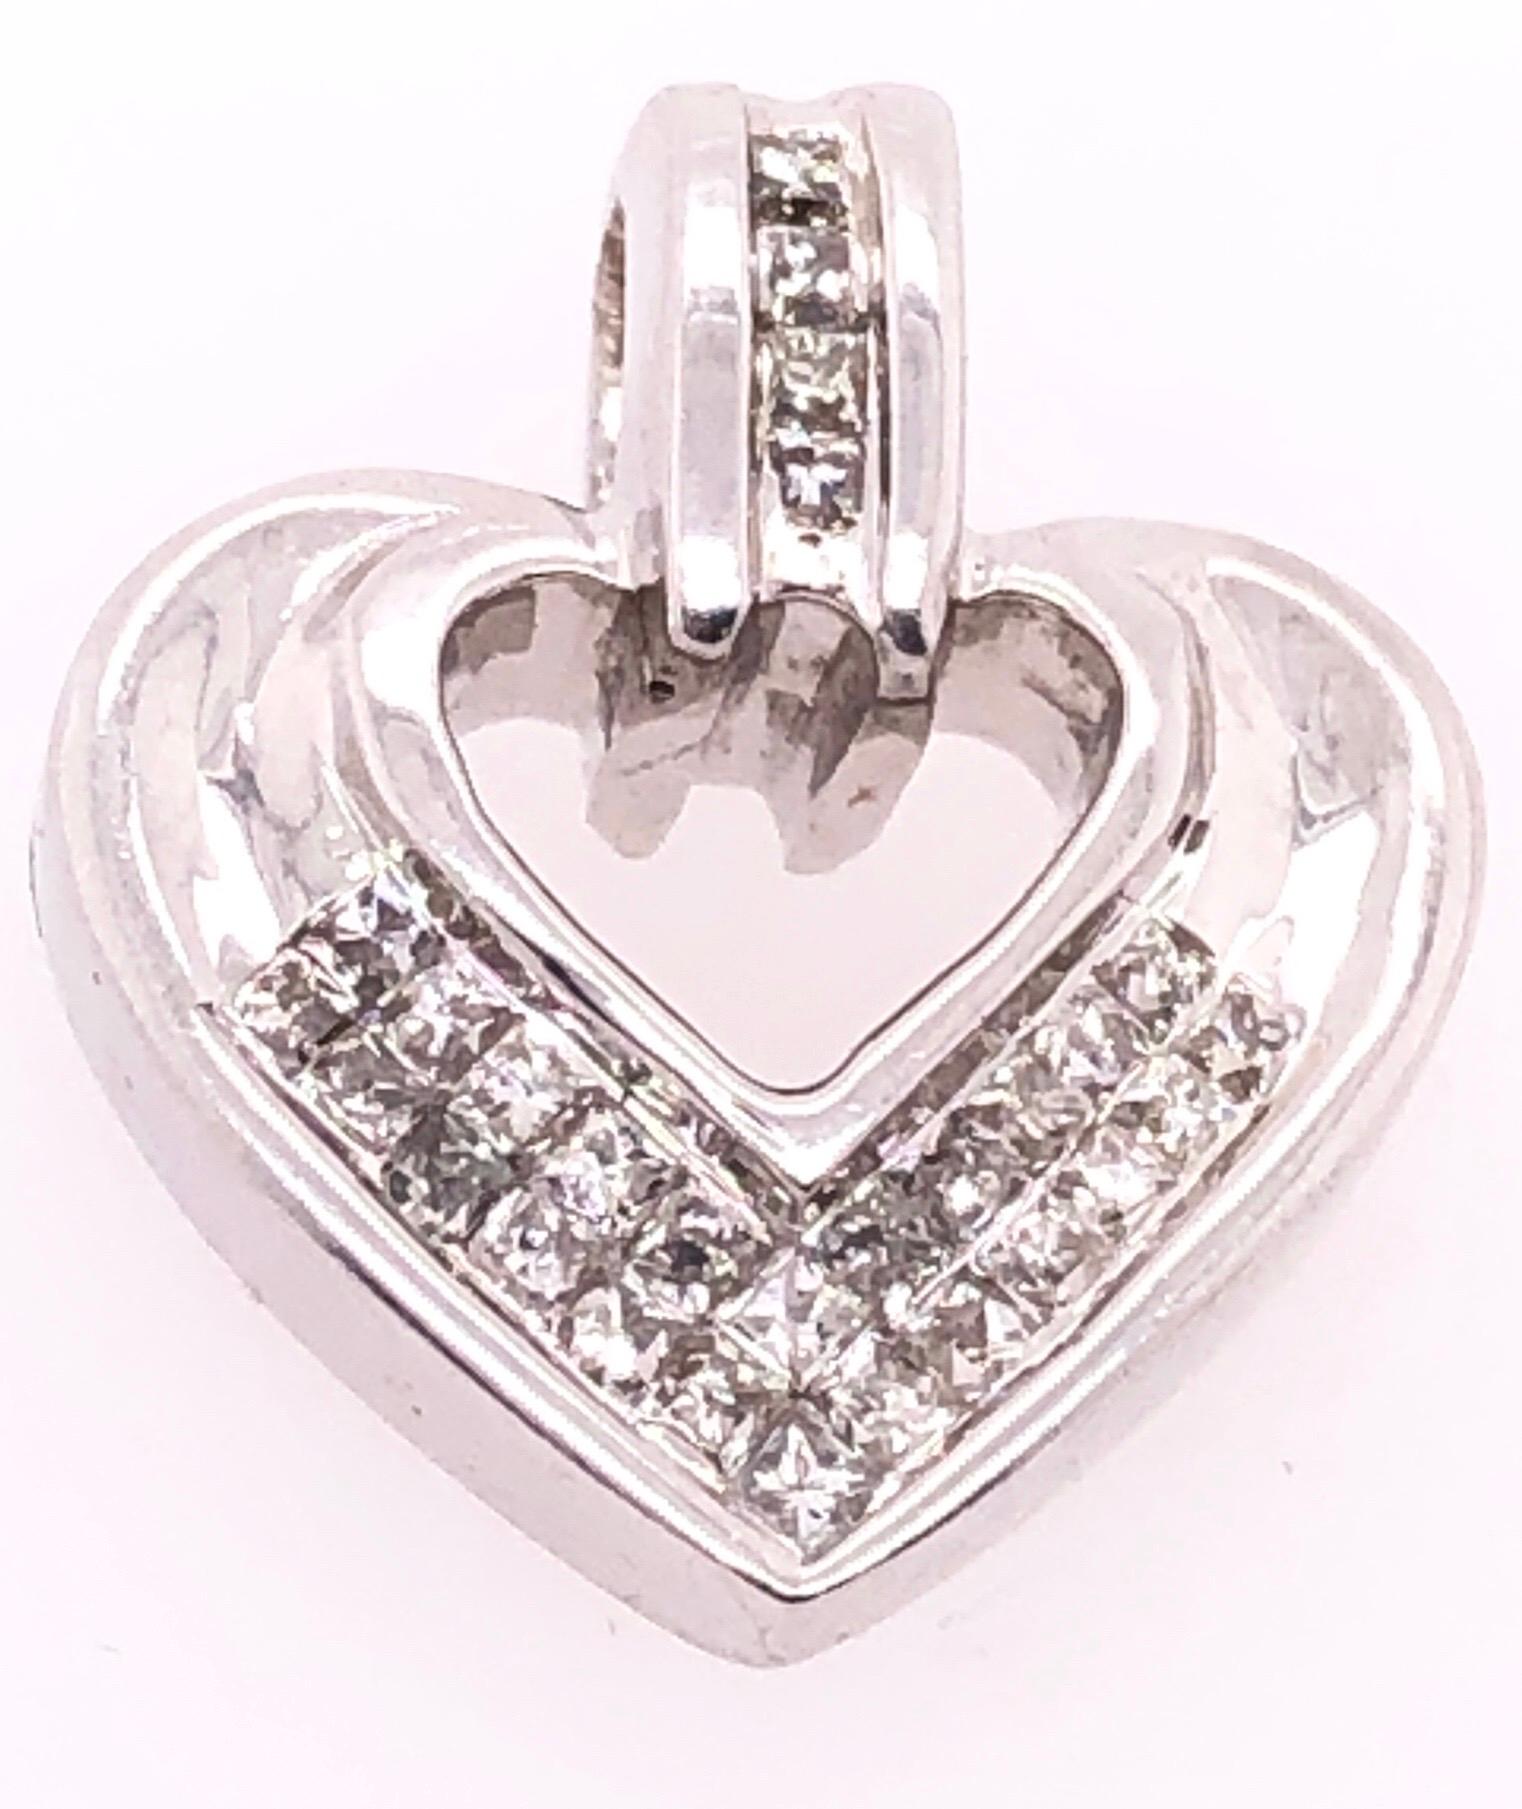 14 Karat White Gold Heart Pendant with Princess Cut Diamonds 0.25 TDW.
2.43 grams total weight.